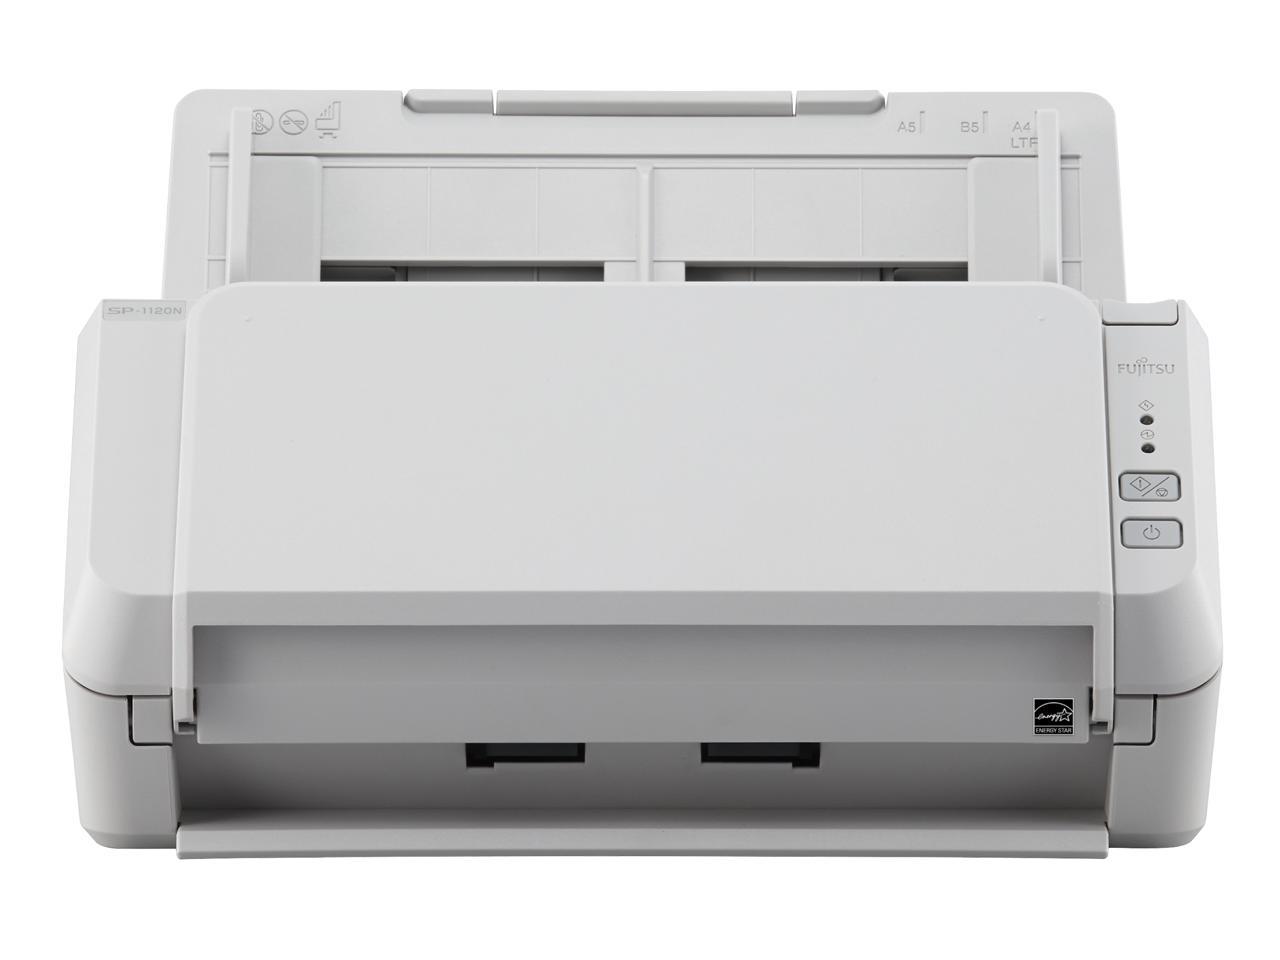 Fujitsu Image Scanner SP-1120N PA03811-B005 ADF (Automatic Document Feeder), Duplex Document Scanner